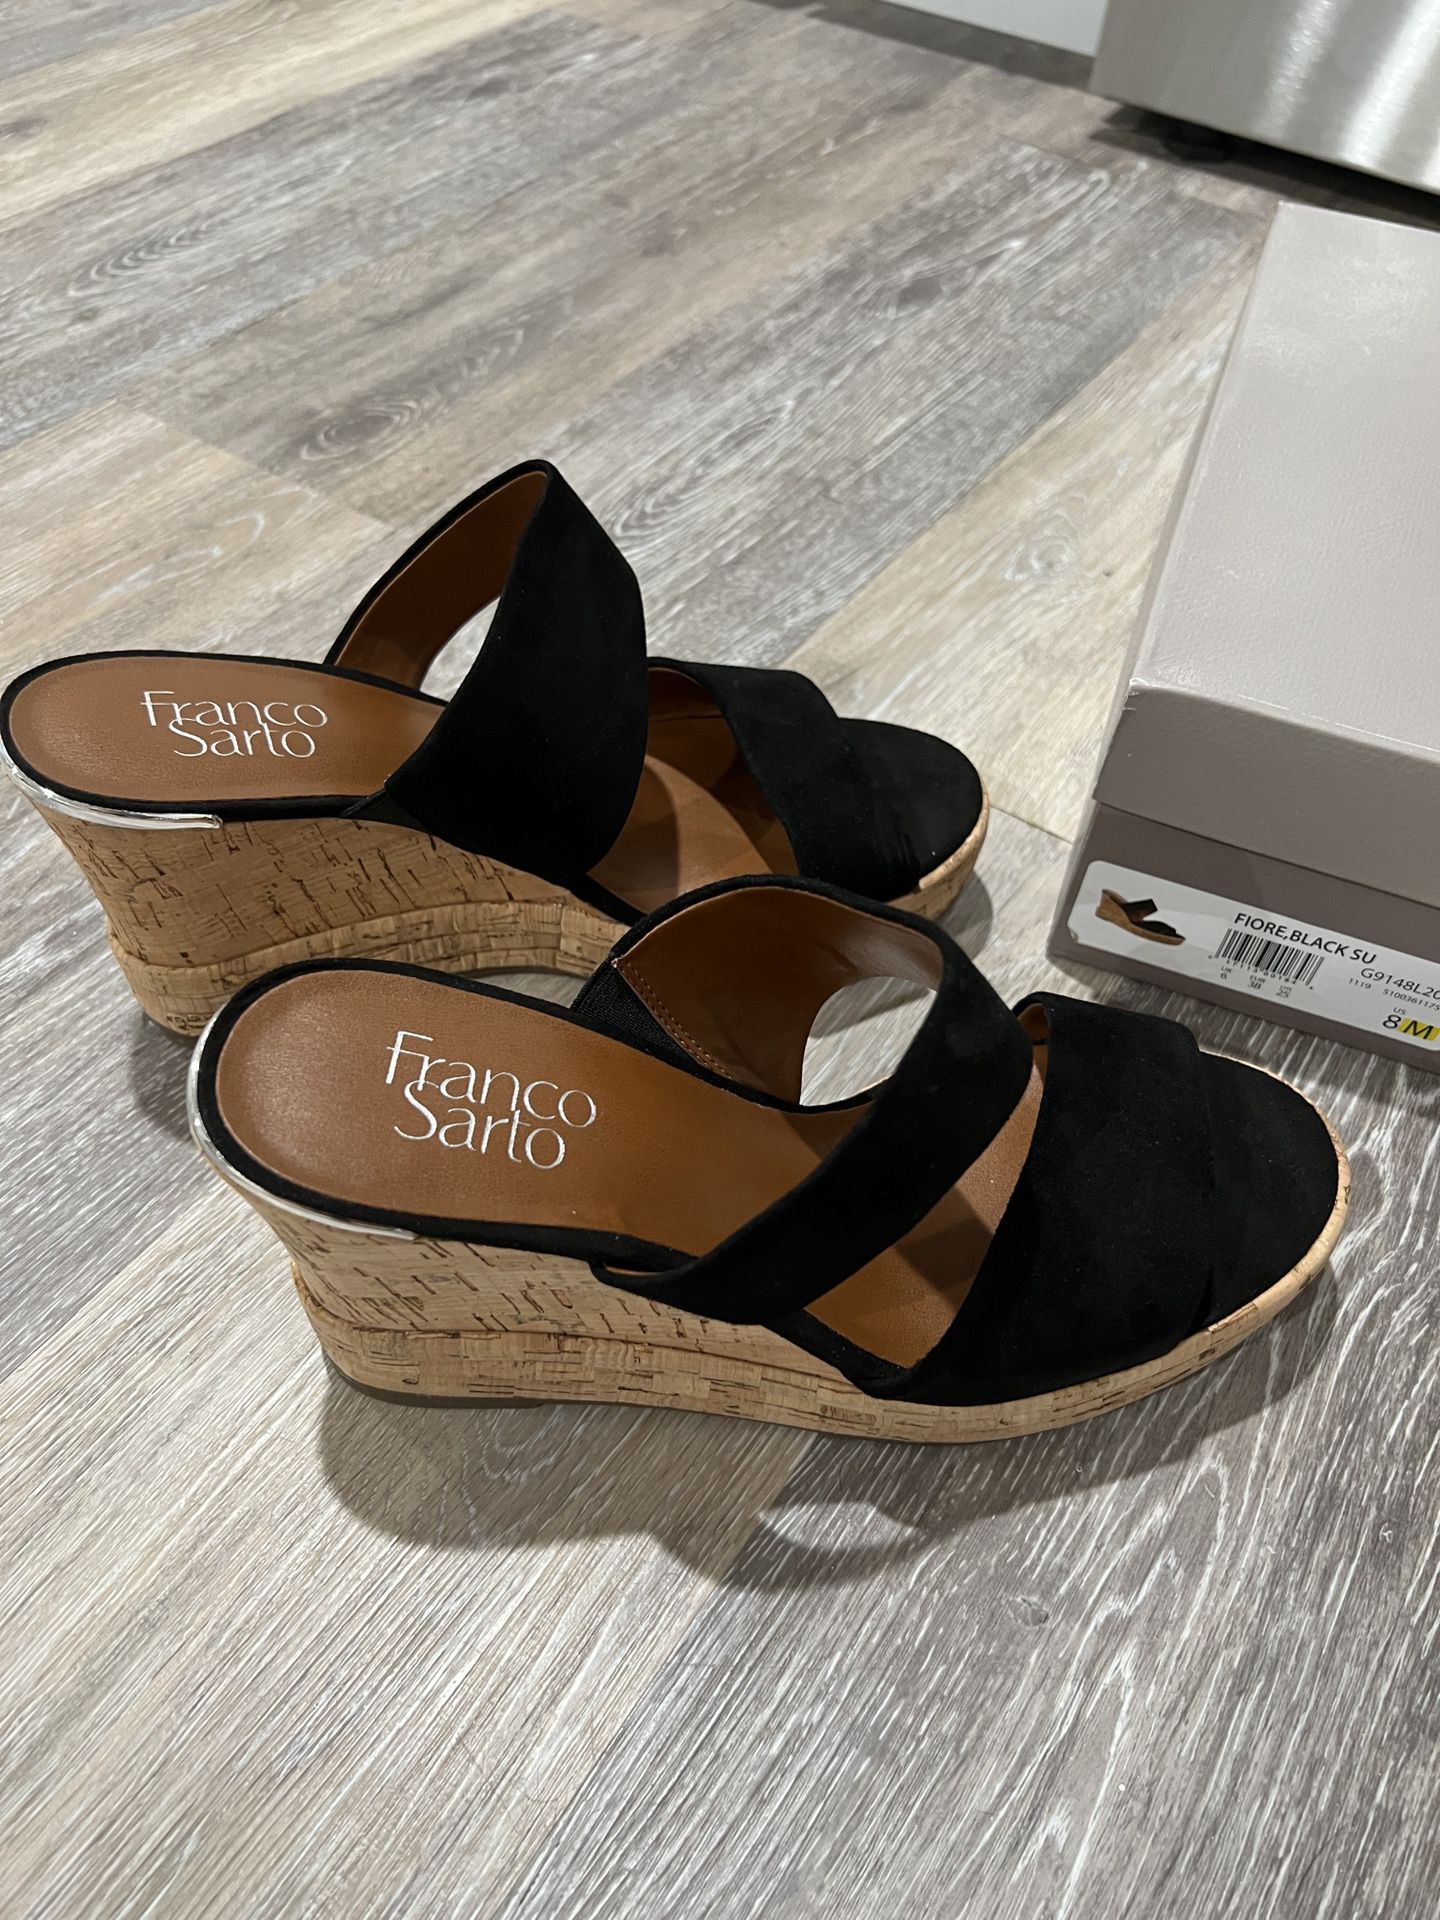 Franco Sarto Sandals